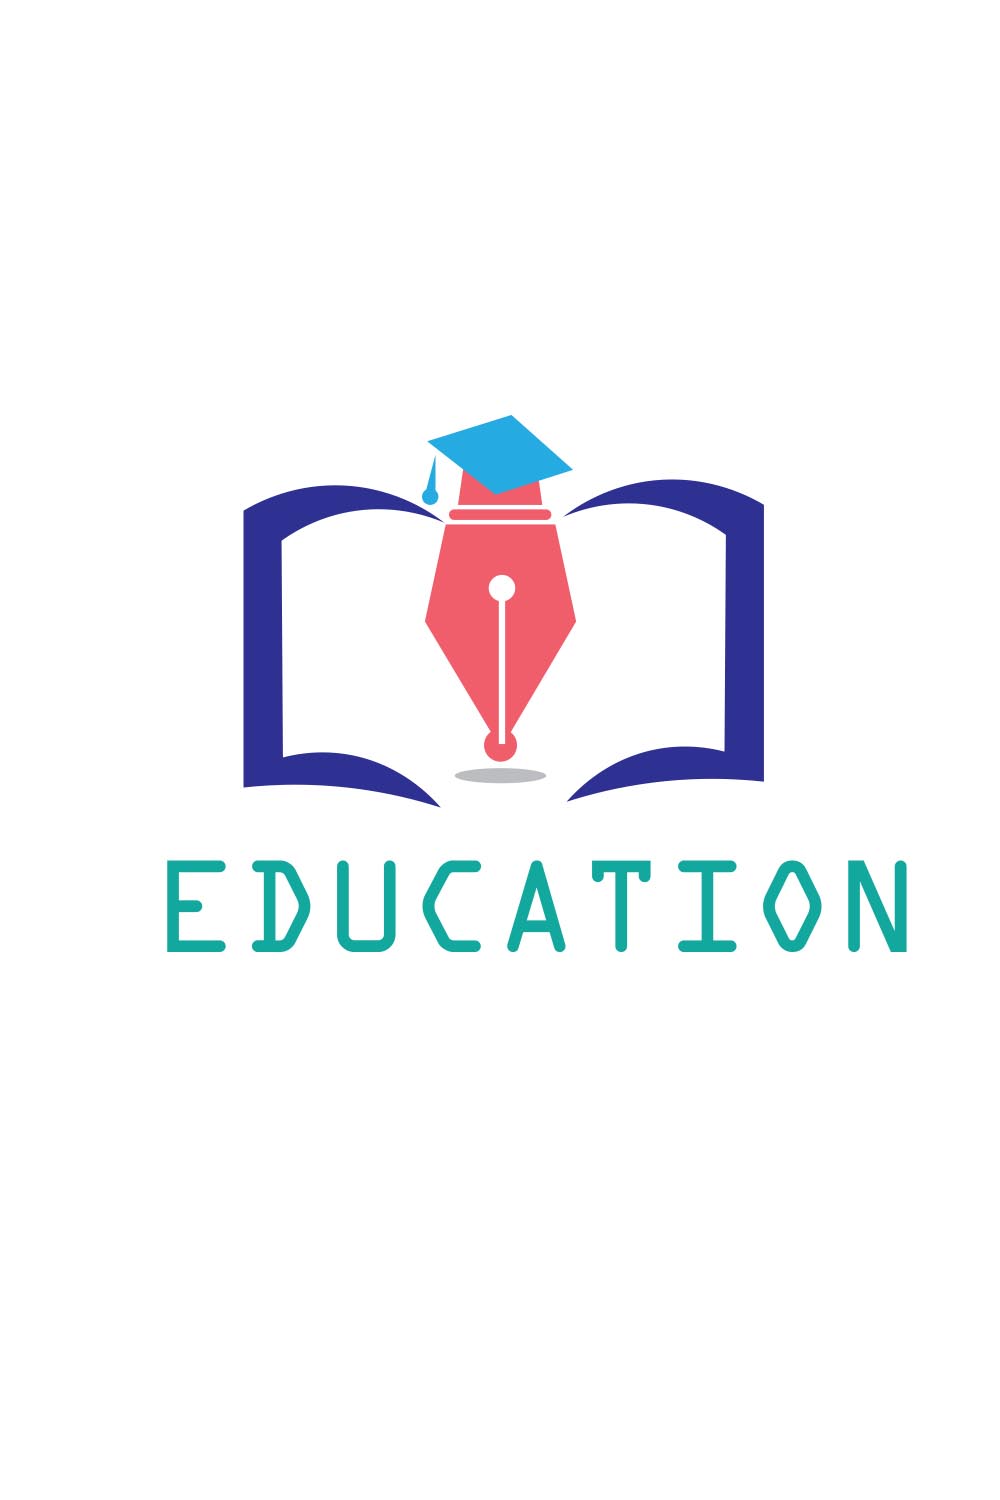 education or graduate logo pinterest preview image.